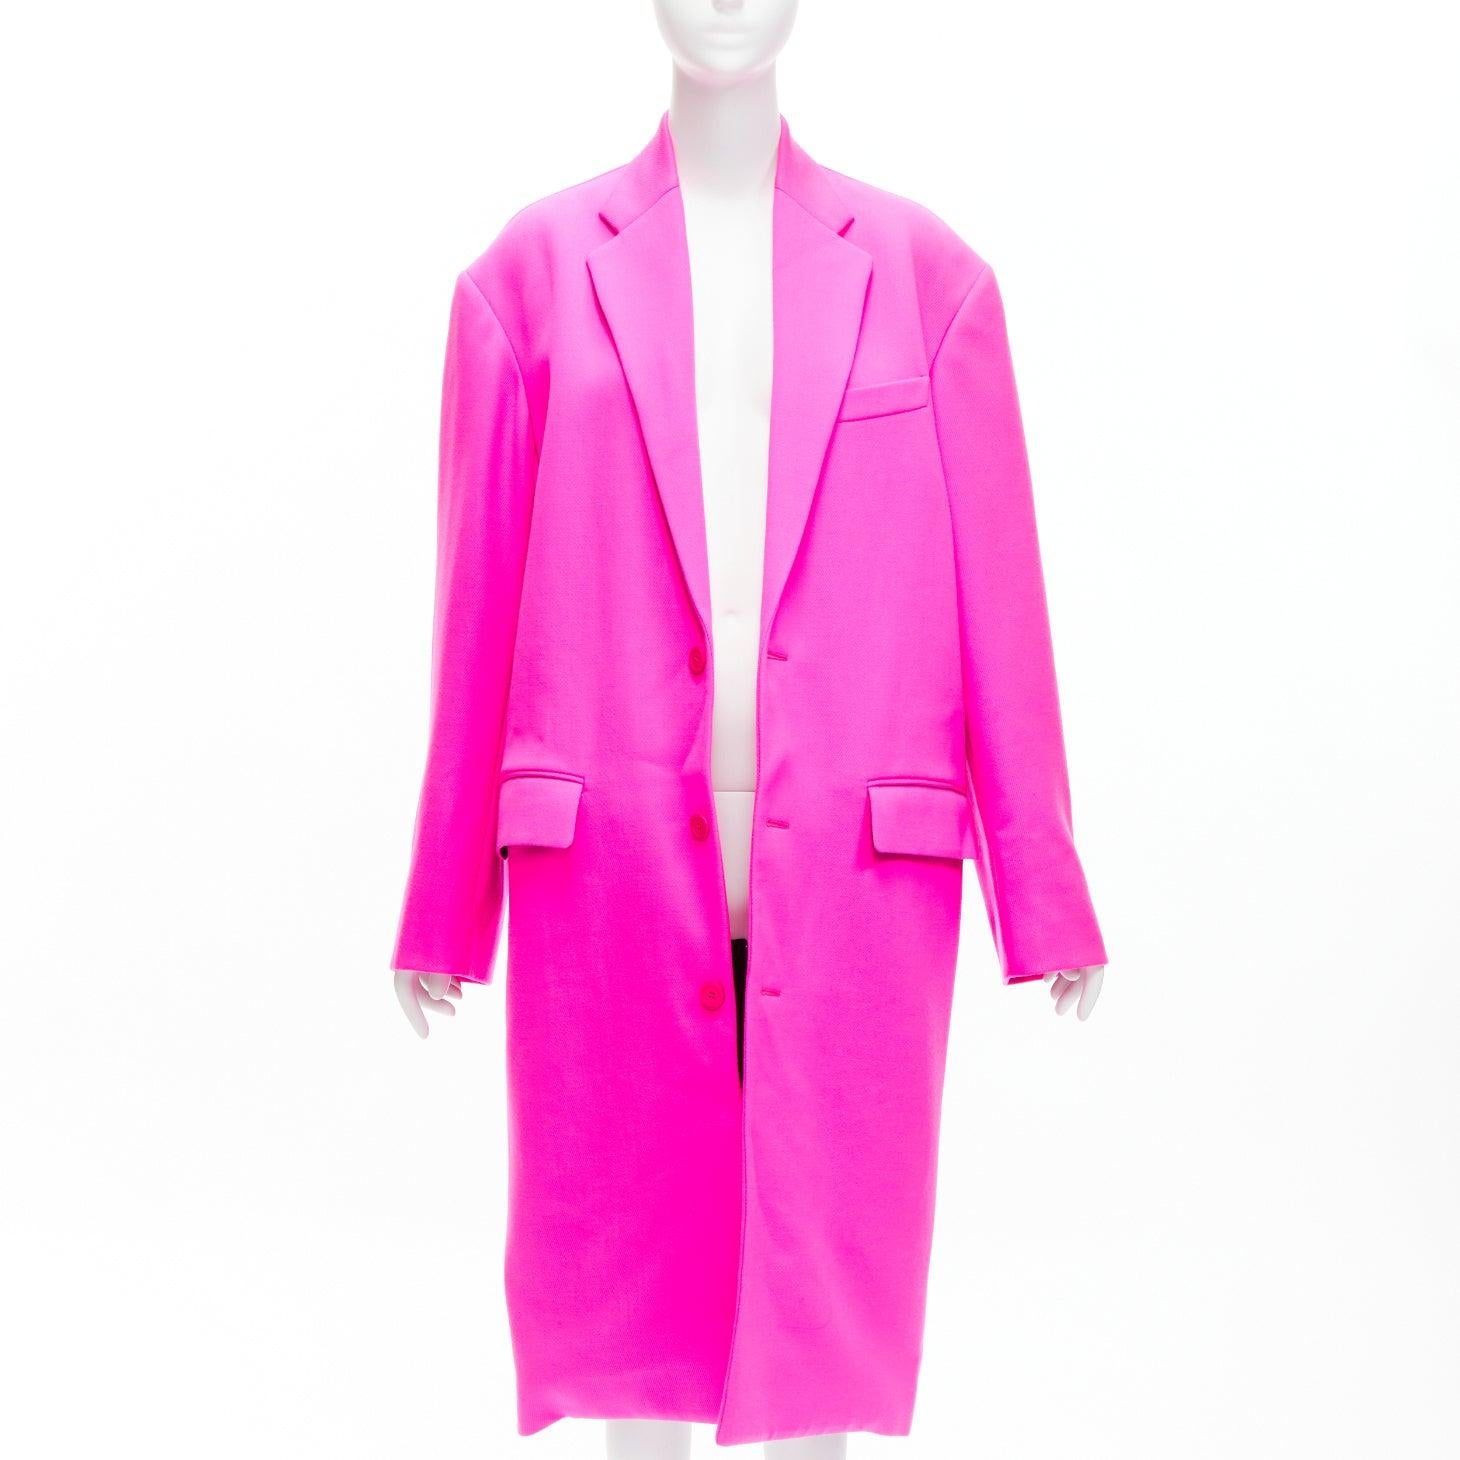 Rose BALENCIAGA manteau long en laine rose cavalier surdimensionné FR34 XS Hailey Beiber en vente